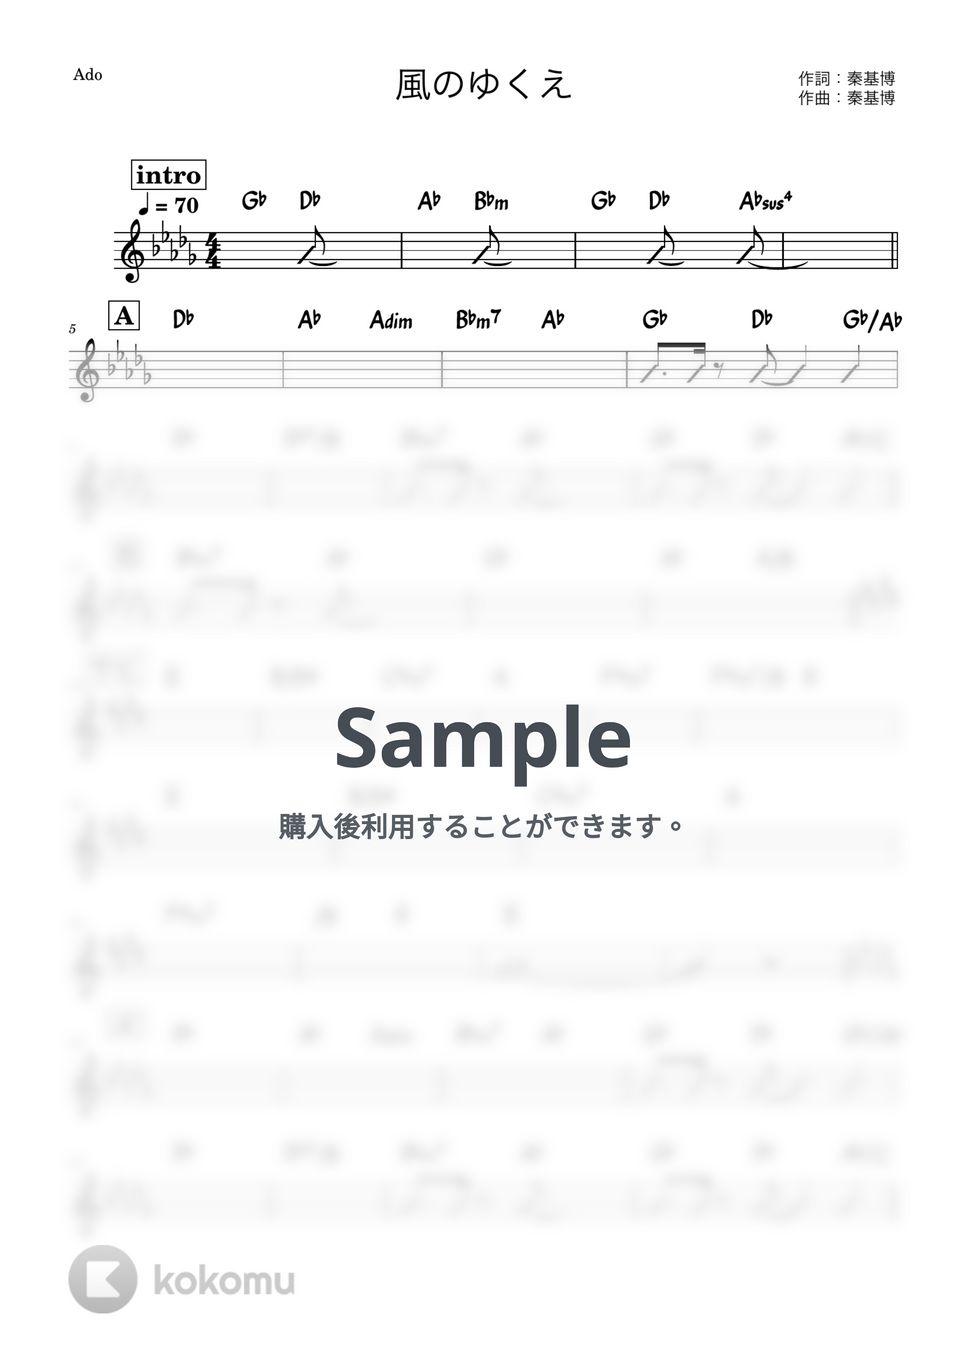 Ado - 風のゆくえ (バンド用コード譜) by 箱譜屋